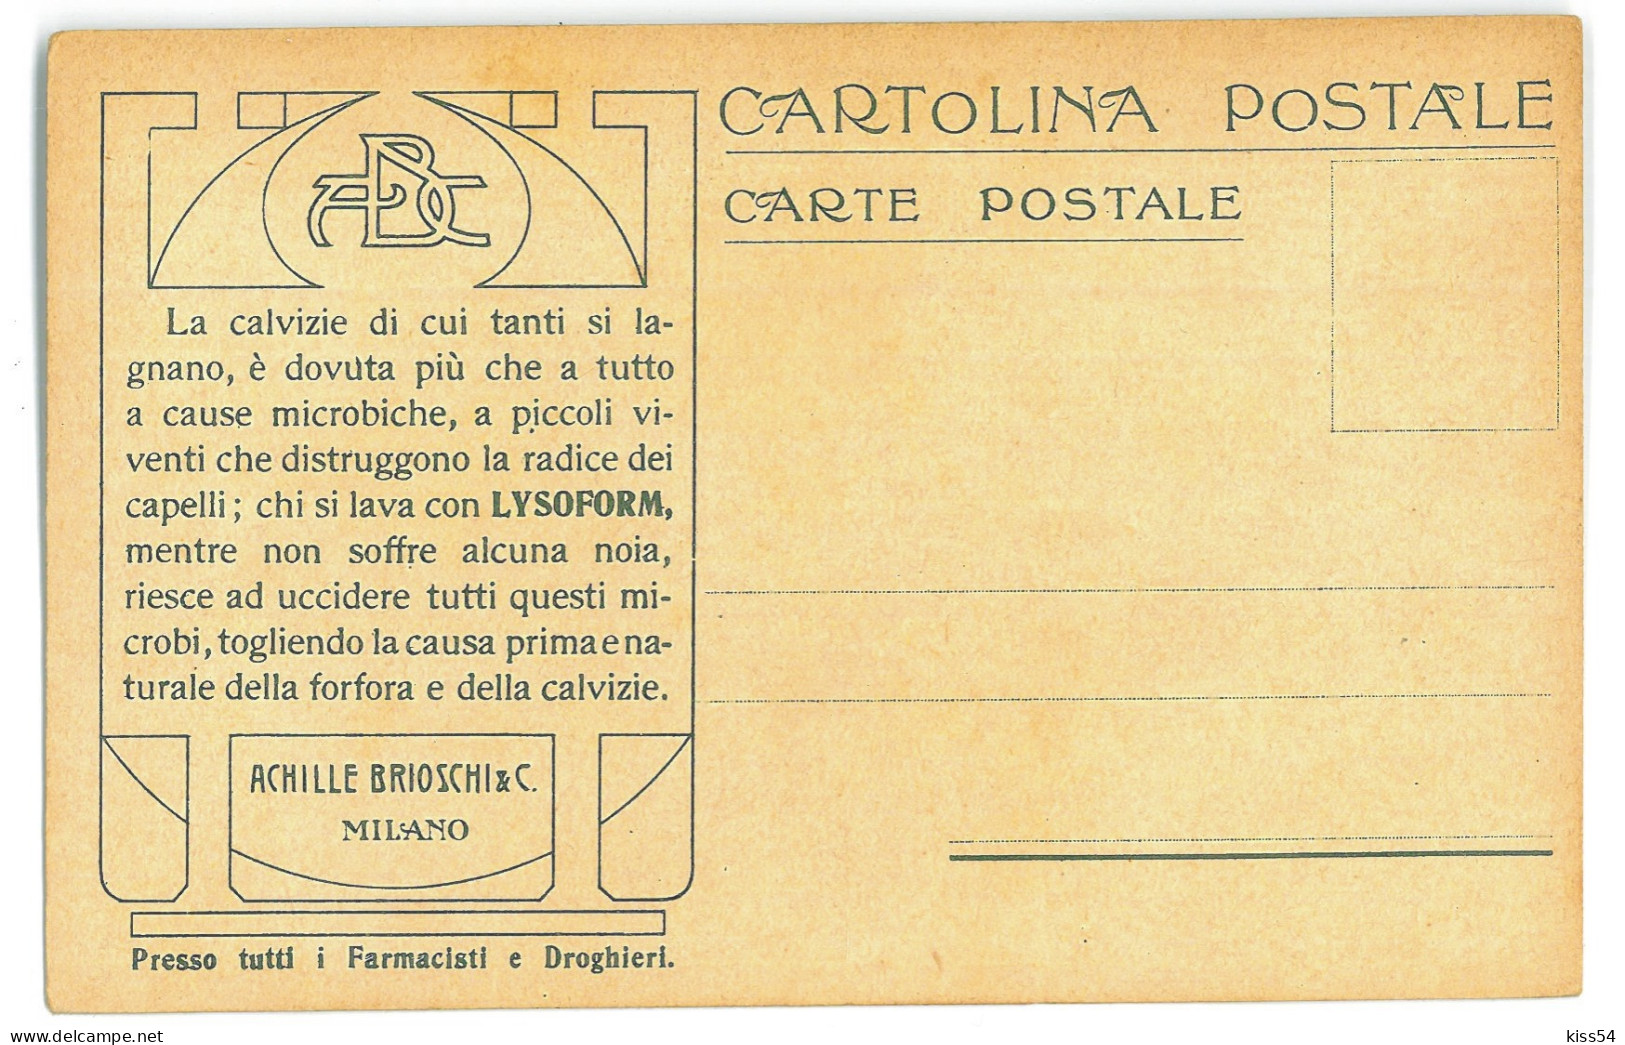 RO 52 - 21376 Flag, Carol I Stamp, POSTMAN, BIKE, Ethnic Woman, Litho, Romania - Old Postcard - Unused - Romania